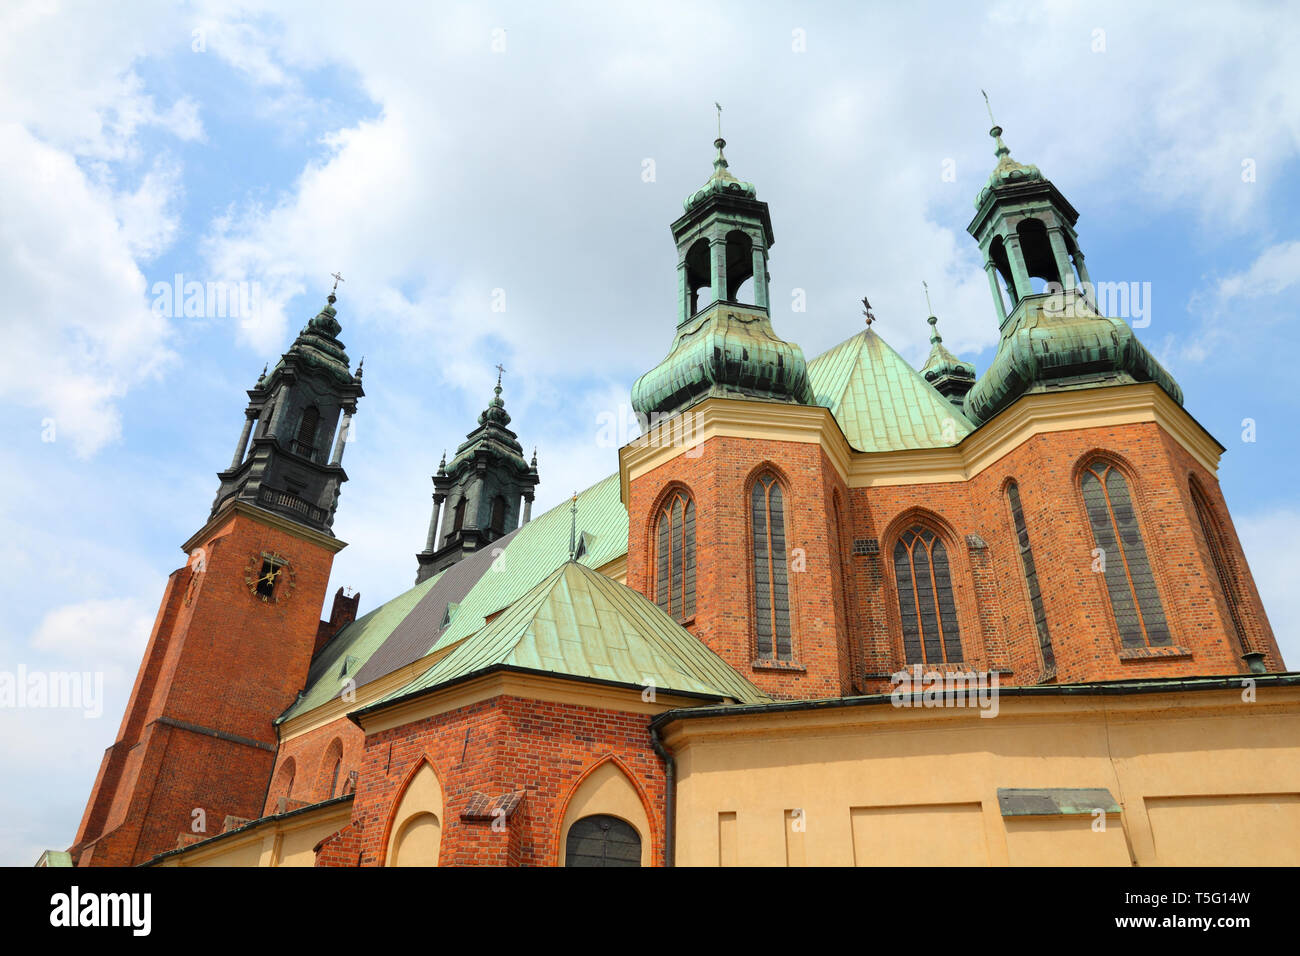 Poznan, Poland - city architecture. Greater Poland province (Wielkopolska). Roman Catholic Cathedral. Stock Photo